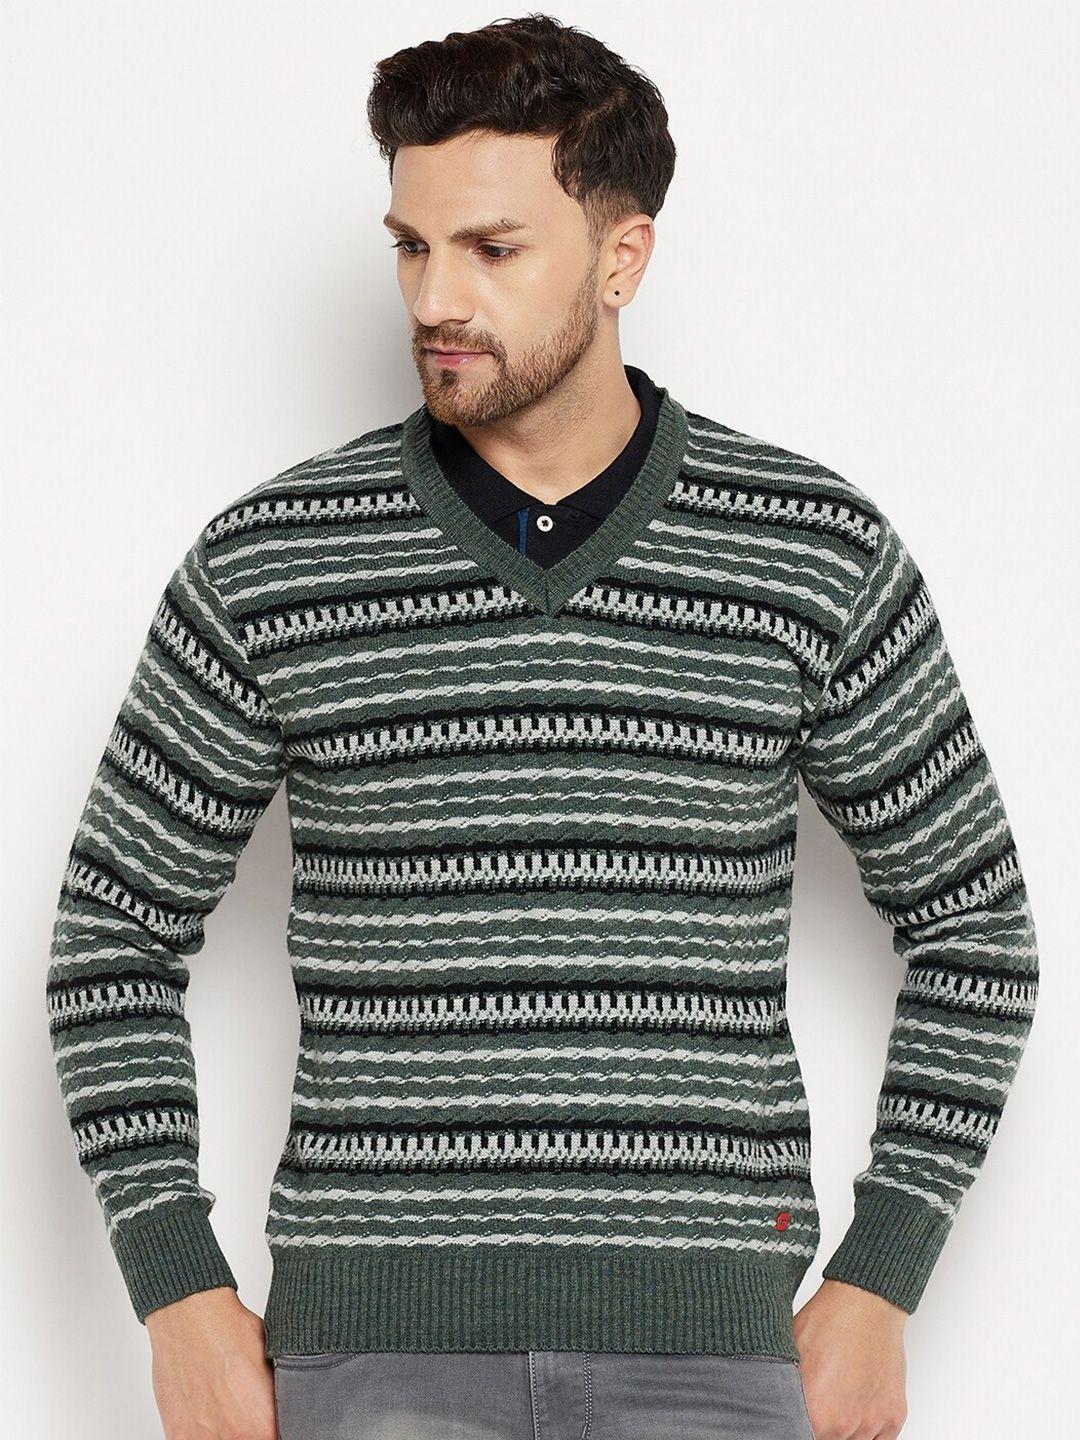 duke-men-green-&-black-striped-striped-pullover